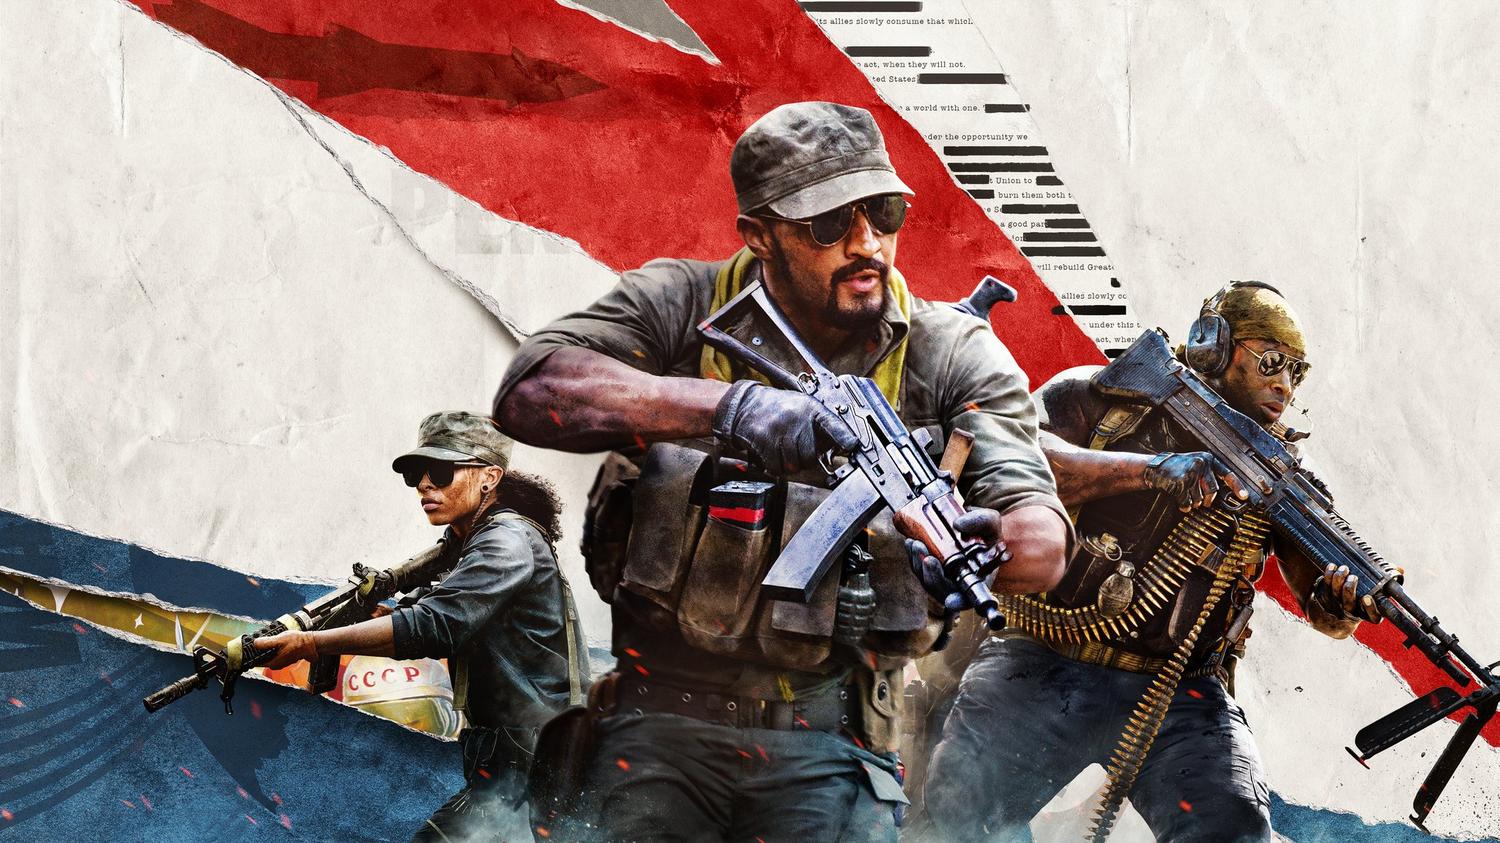 Call of Duty: Cold War [PS4 / PS5 ANA KONU]